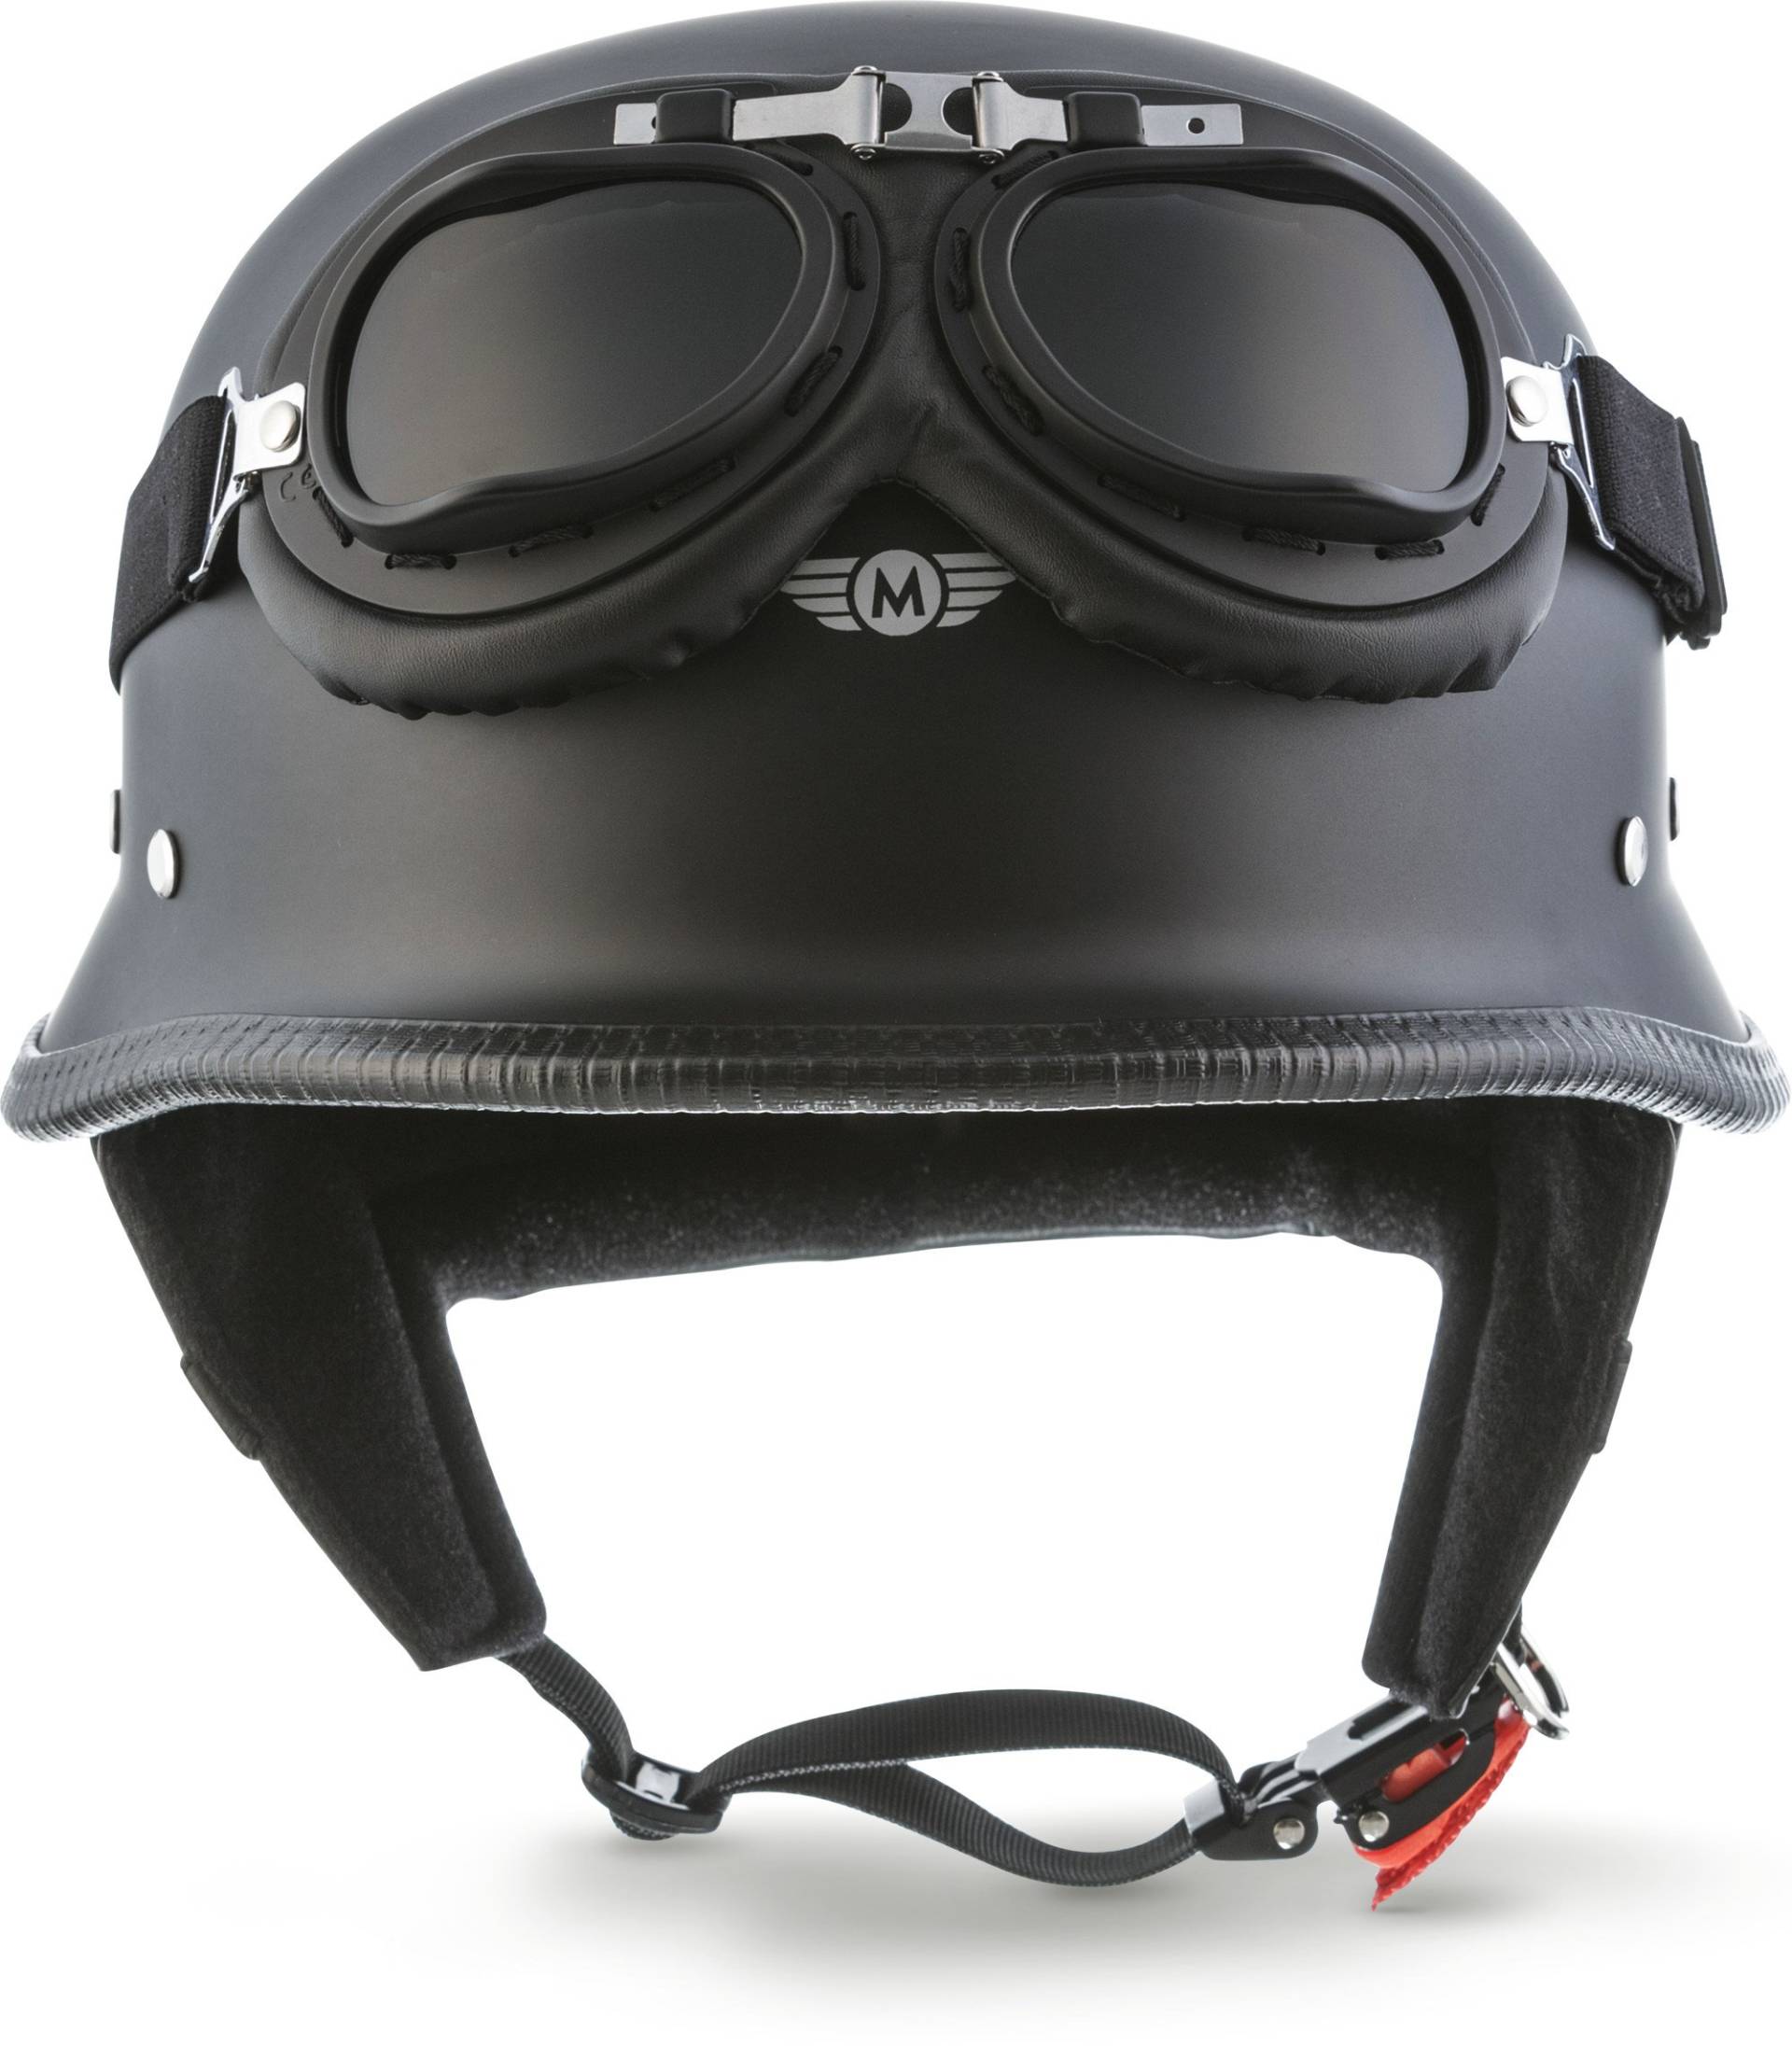 Moto Helmets® D33-Set „Matt Black“ · Brain-Cap · Halbschale Jet-Helm Motorrad-Helm Roller-Helm Scooter-Helm Bobber Mofa-Helm Chopper Retro Cruiser Vintage Pilot Biker Helmet Brille · S (55-56cm) von Moto Helmets